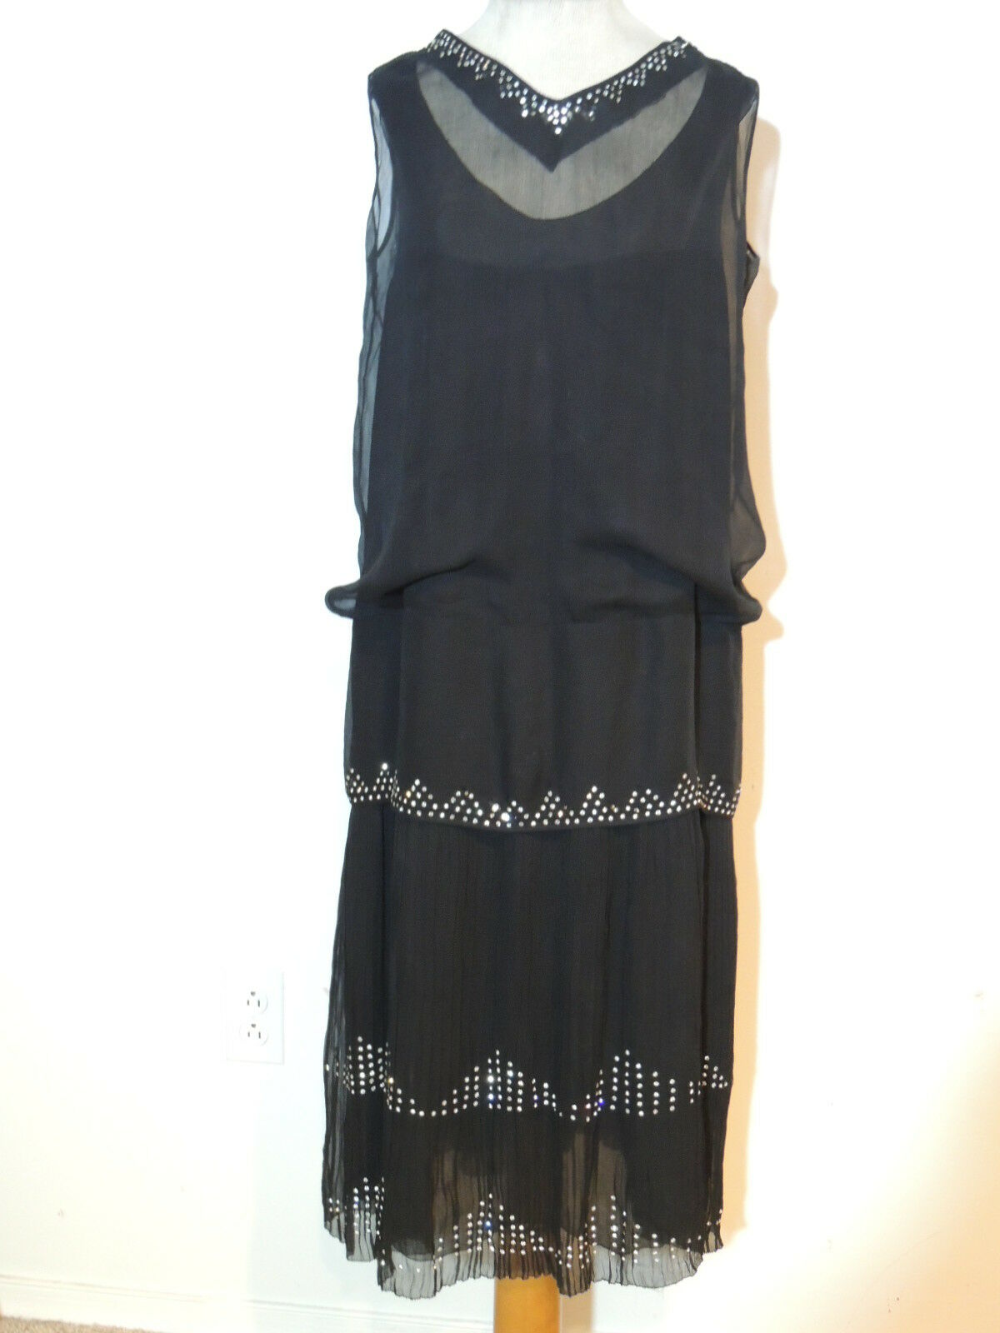 Details about 1920's Black Silk Chiffon Flapper Dress w Rhinestone Trim SM - MED -   10 dress Silk flappers ideas